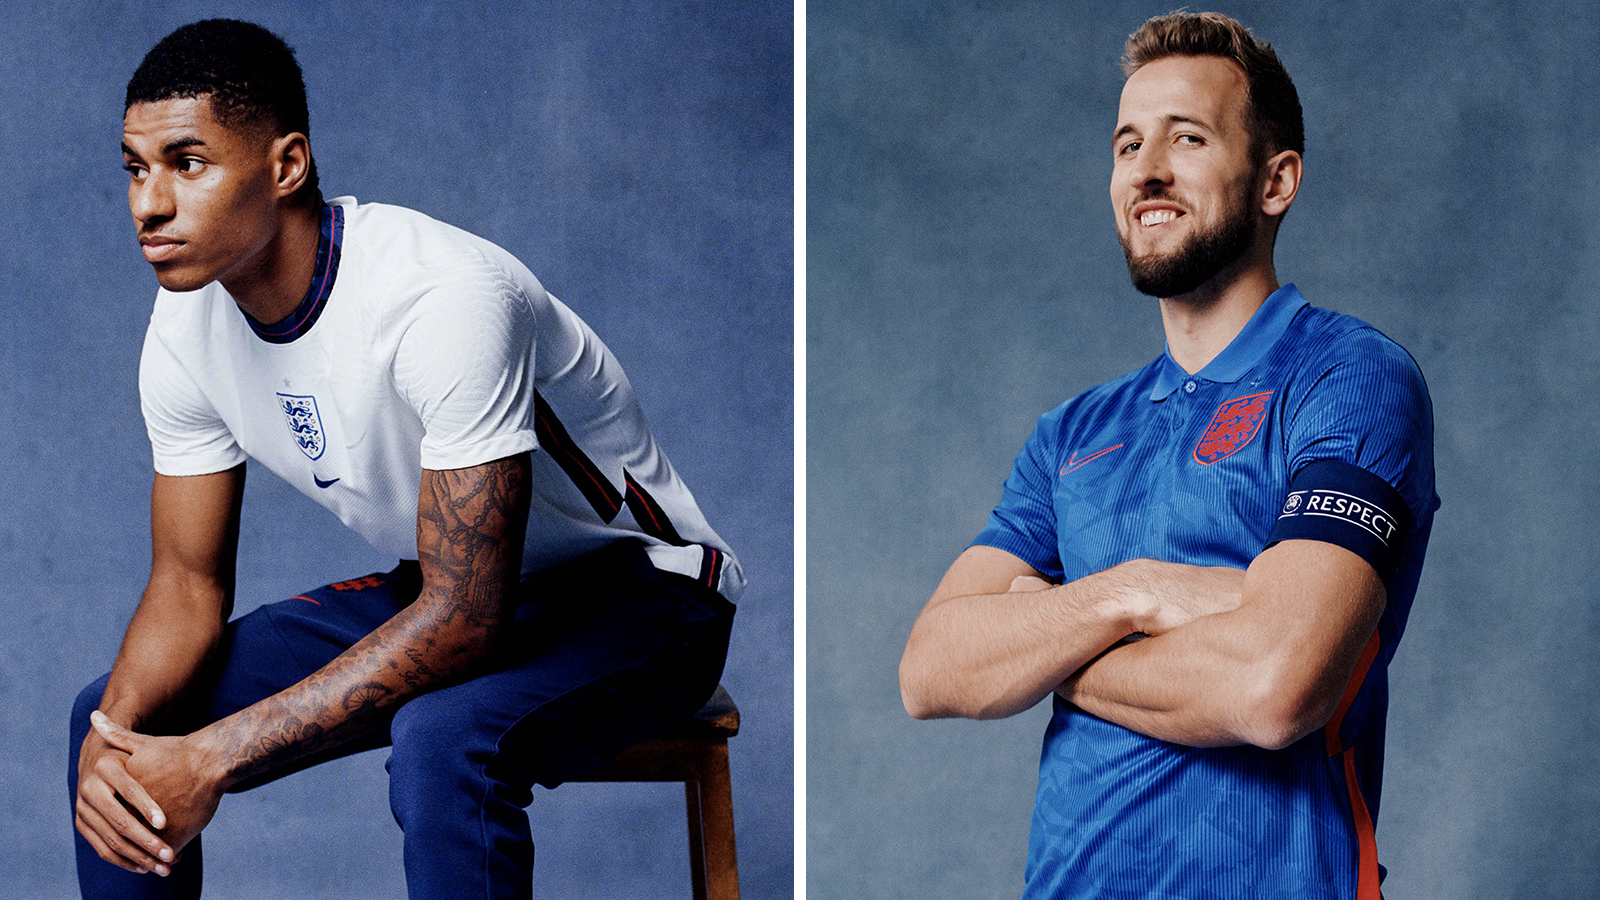 England National Team Shirts, Kits, England National Team Range &  Merchandise